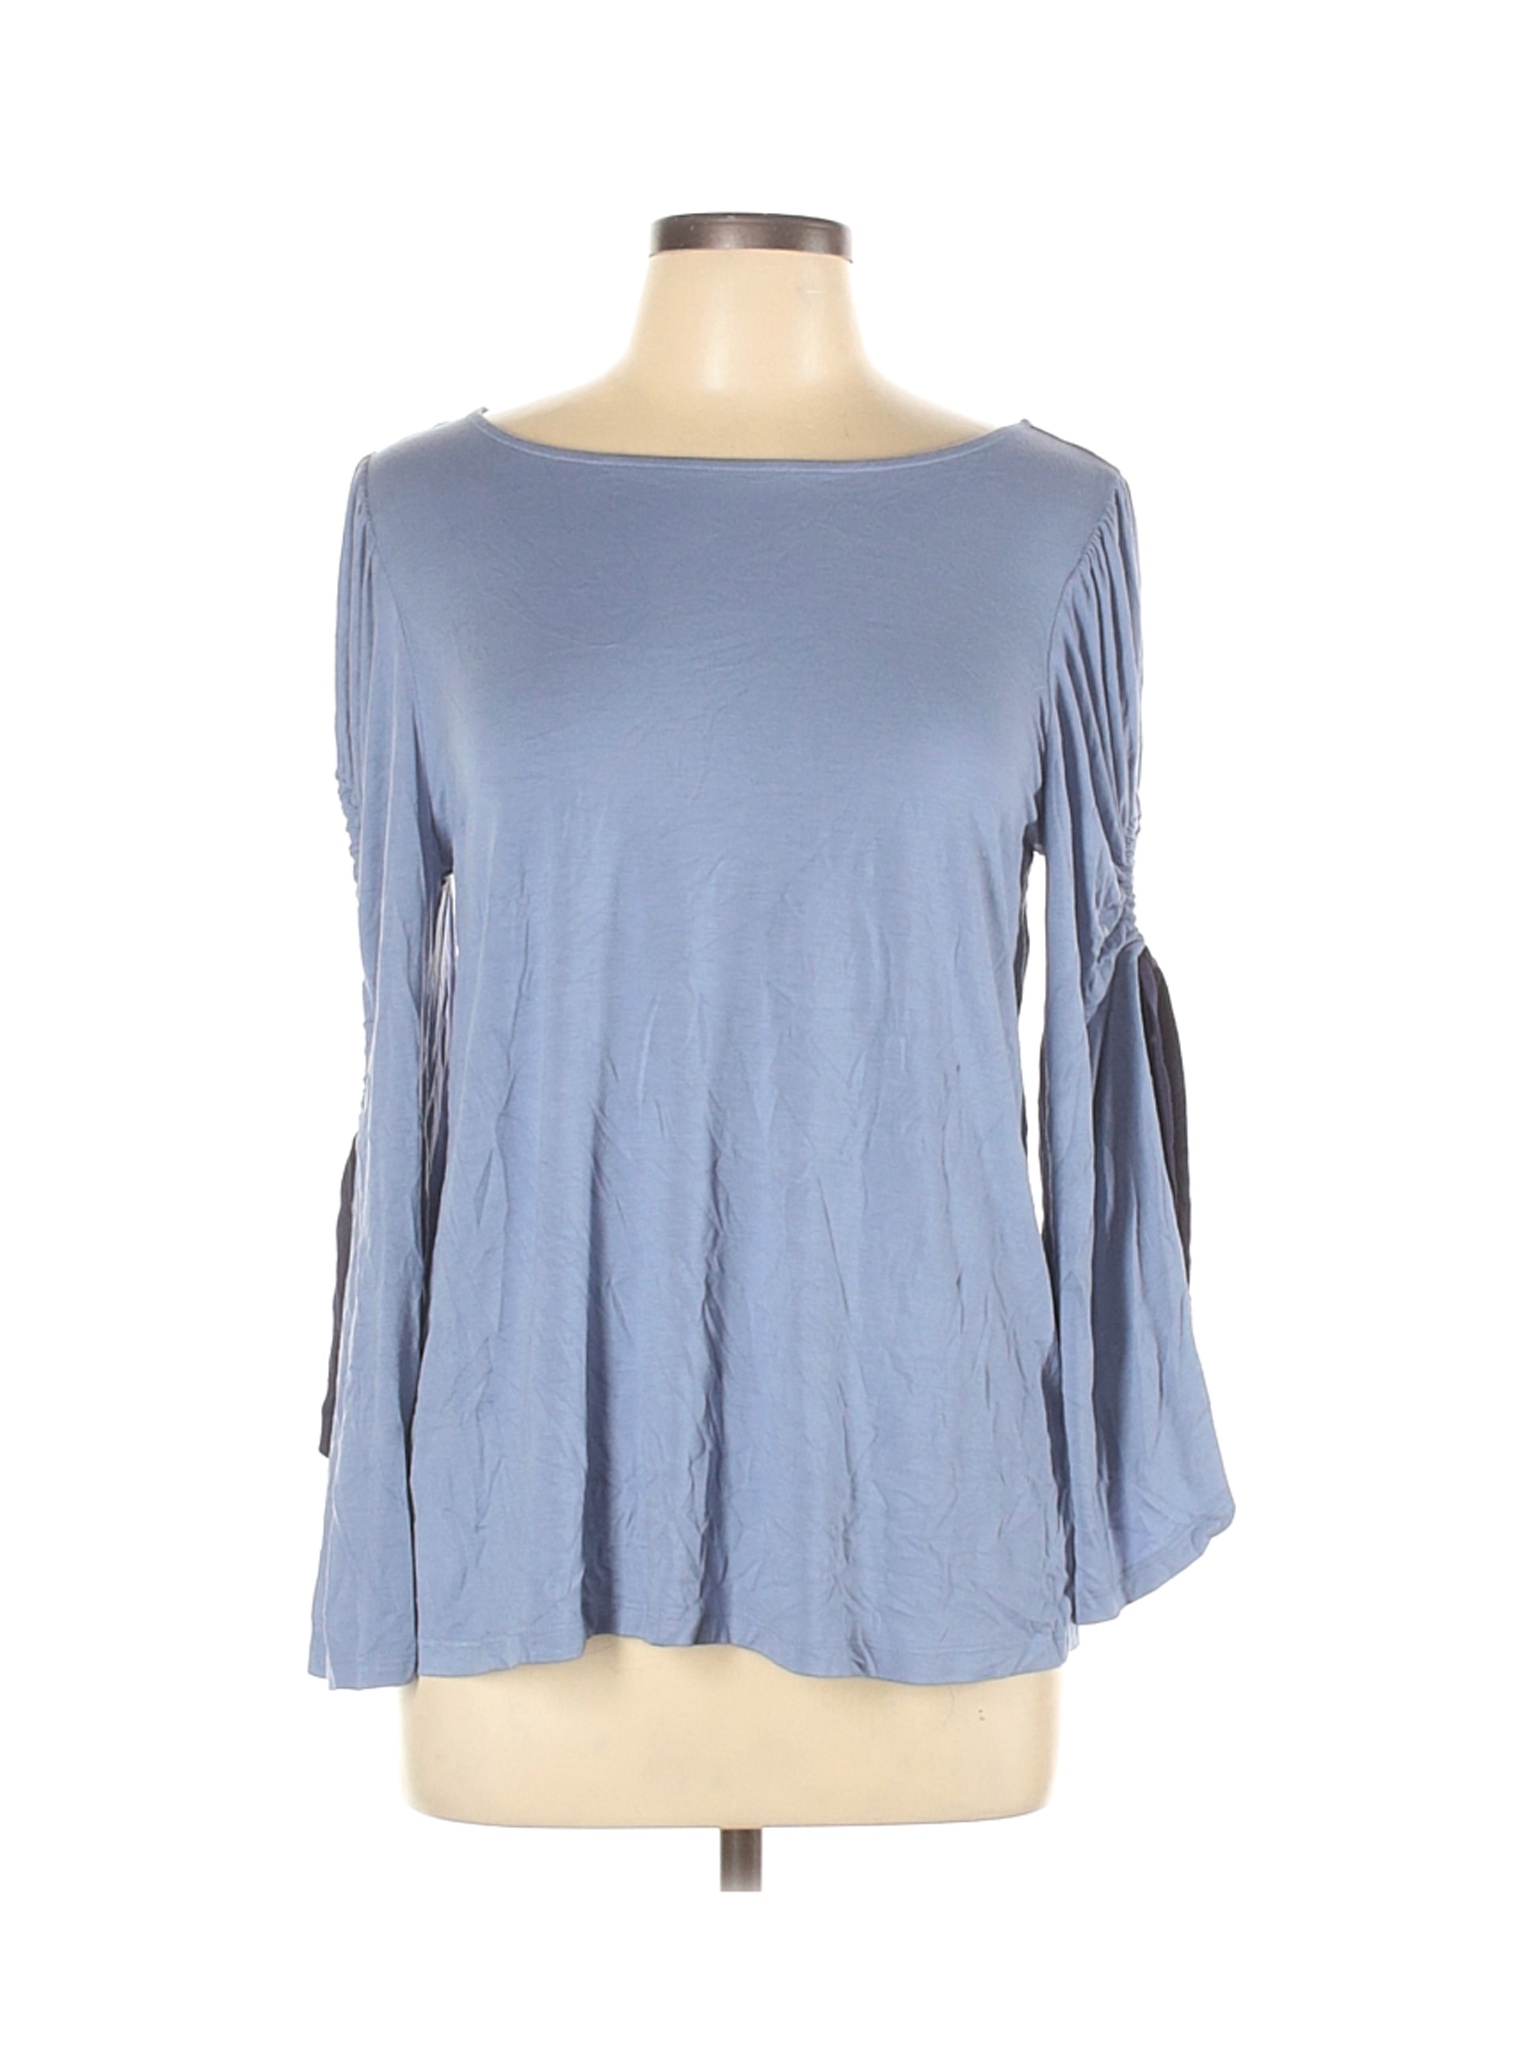 NWT Neiman Marcus Women Blue Long Sleeve Top L | eBay